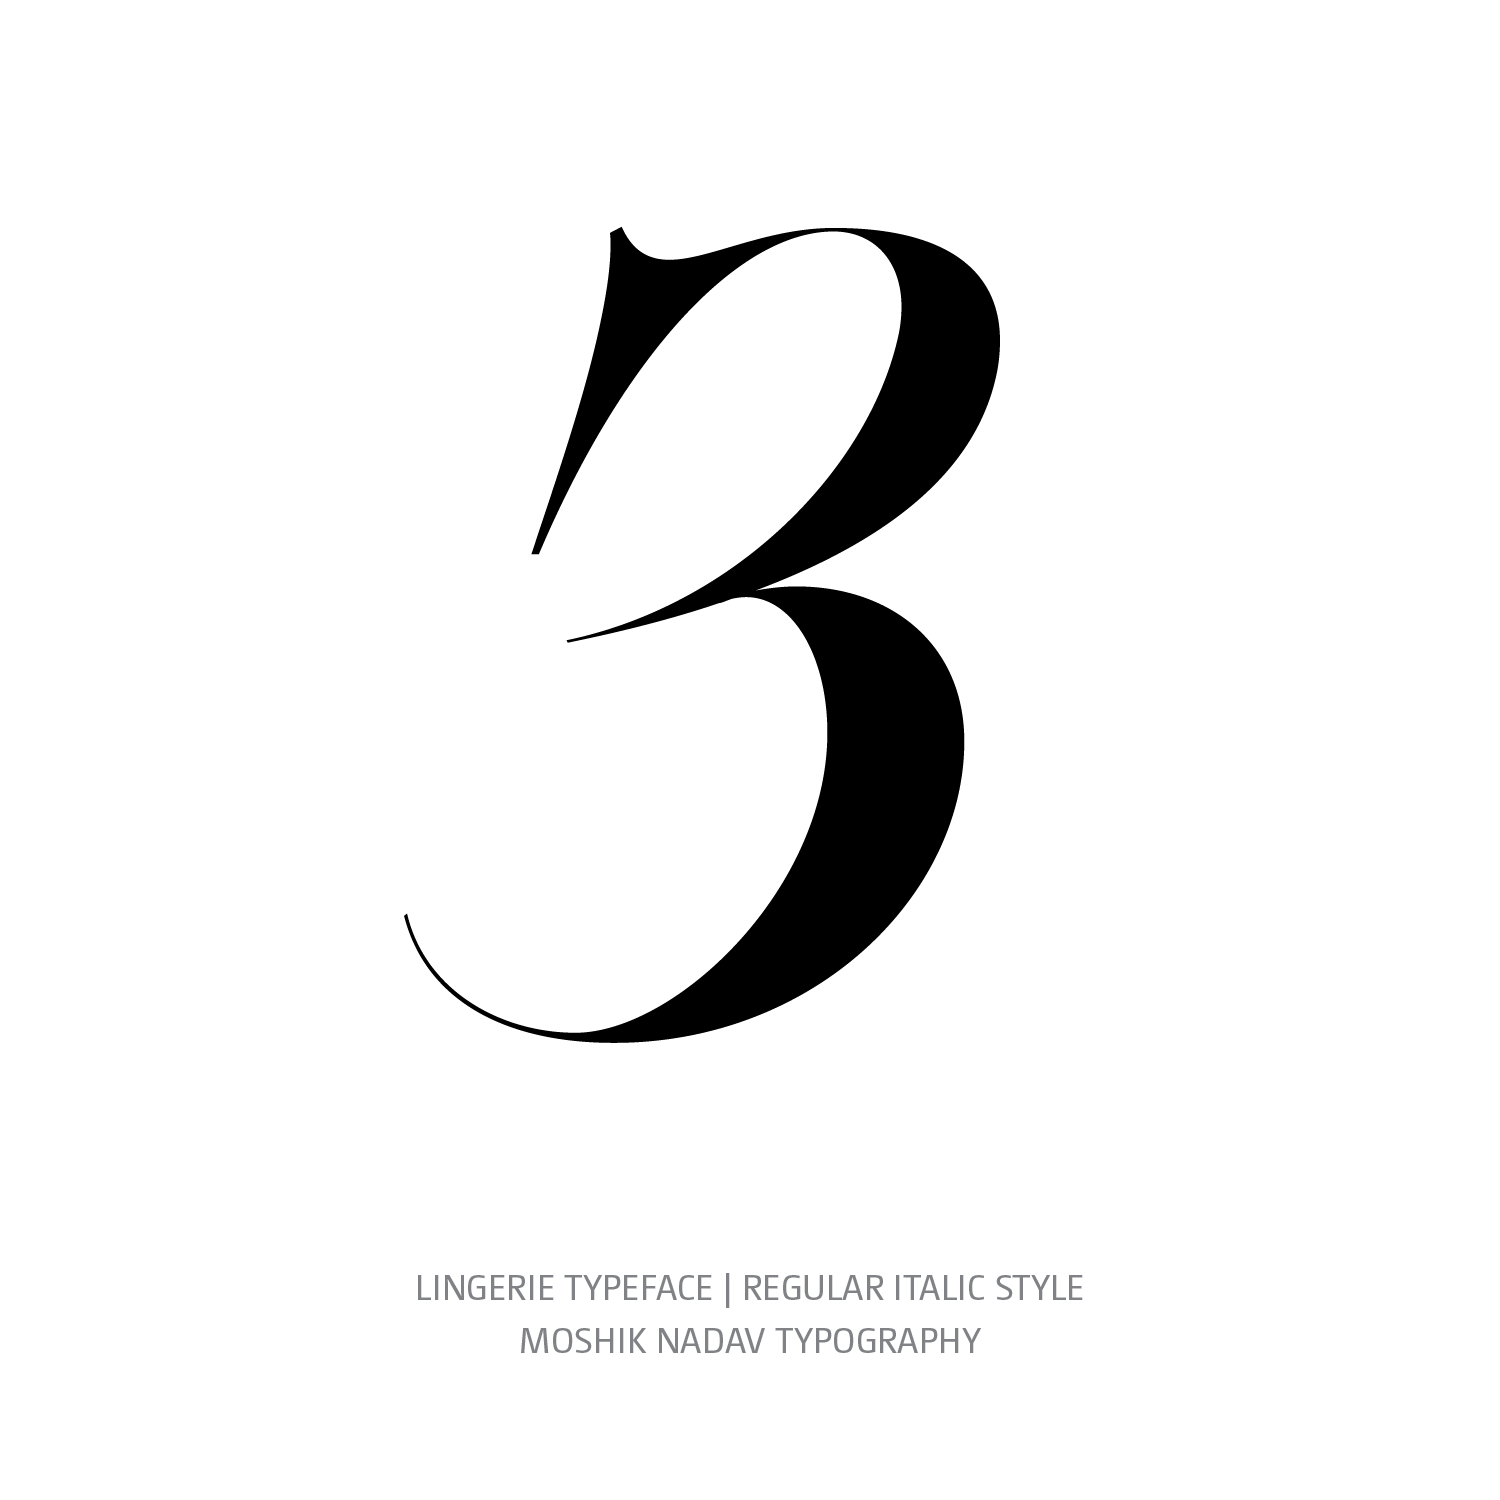 Lingerie Typeface Regular Italic 3 - Fashion fonts by Moshik Nadav Typography